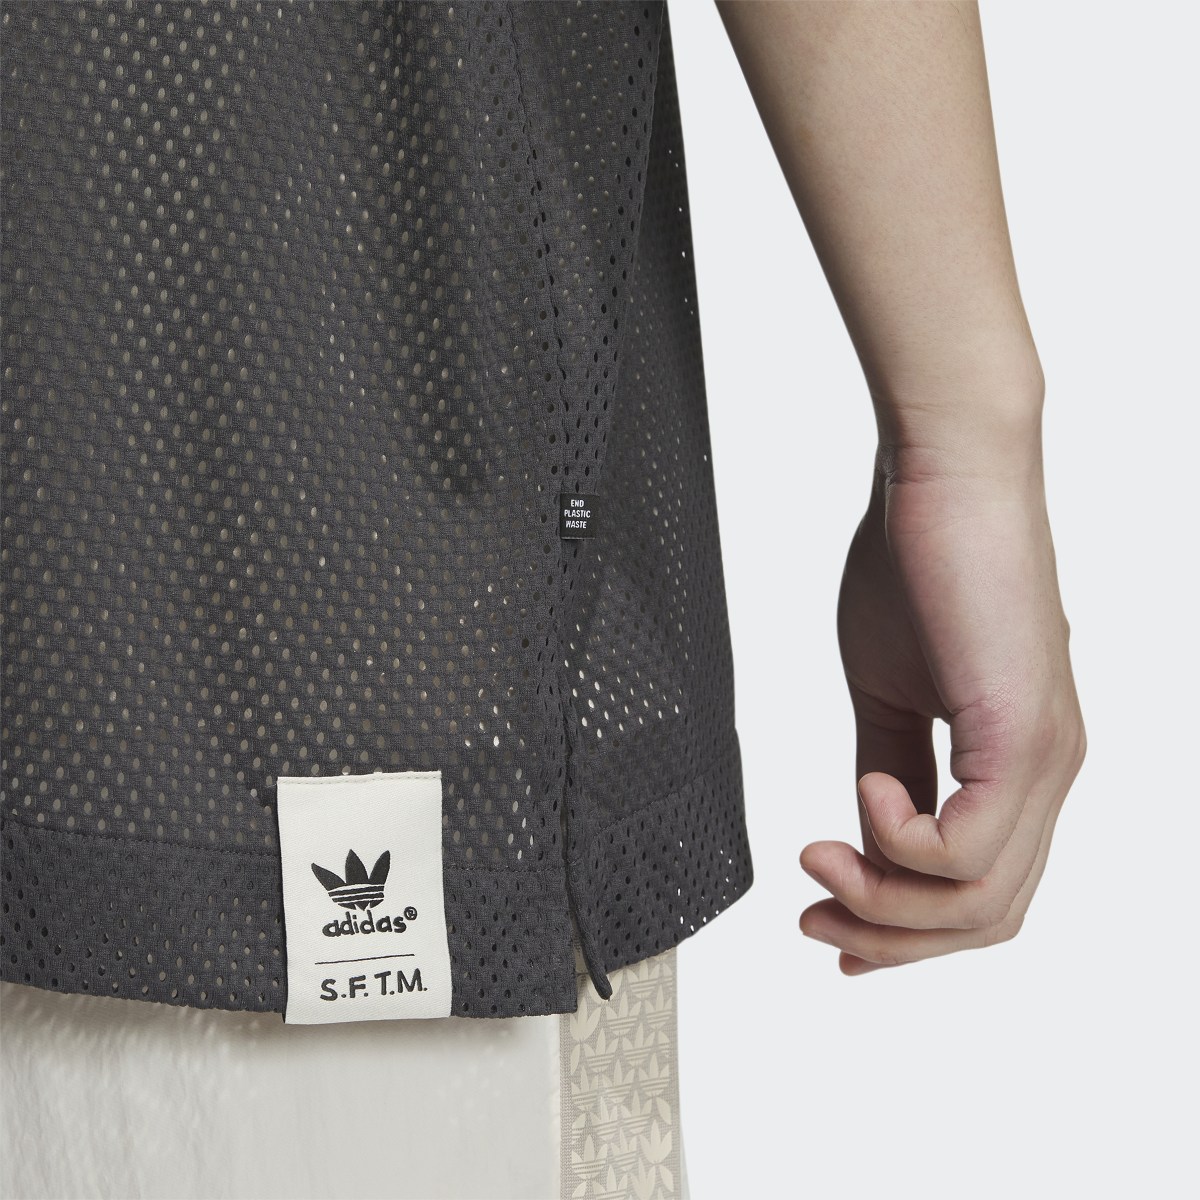 Adidas SFTM Short Sleeve Shirt (Gender Neutral). 6